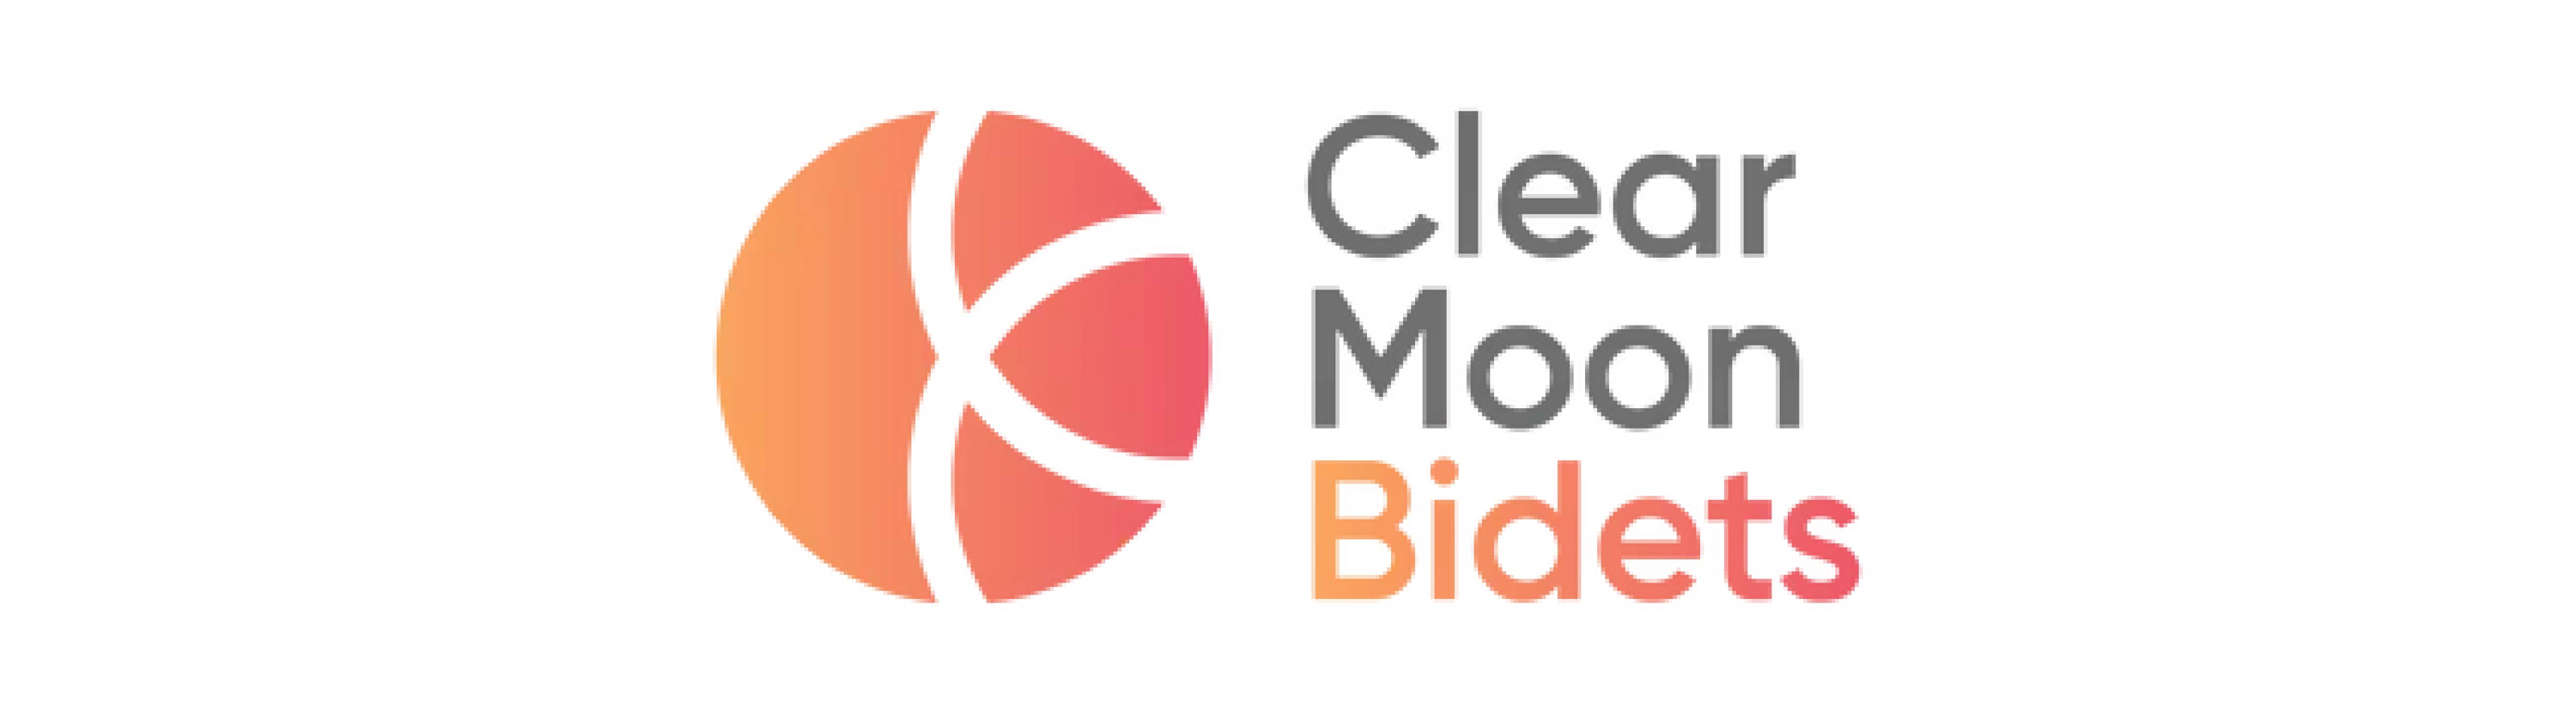 clear moon bidet article